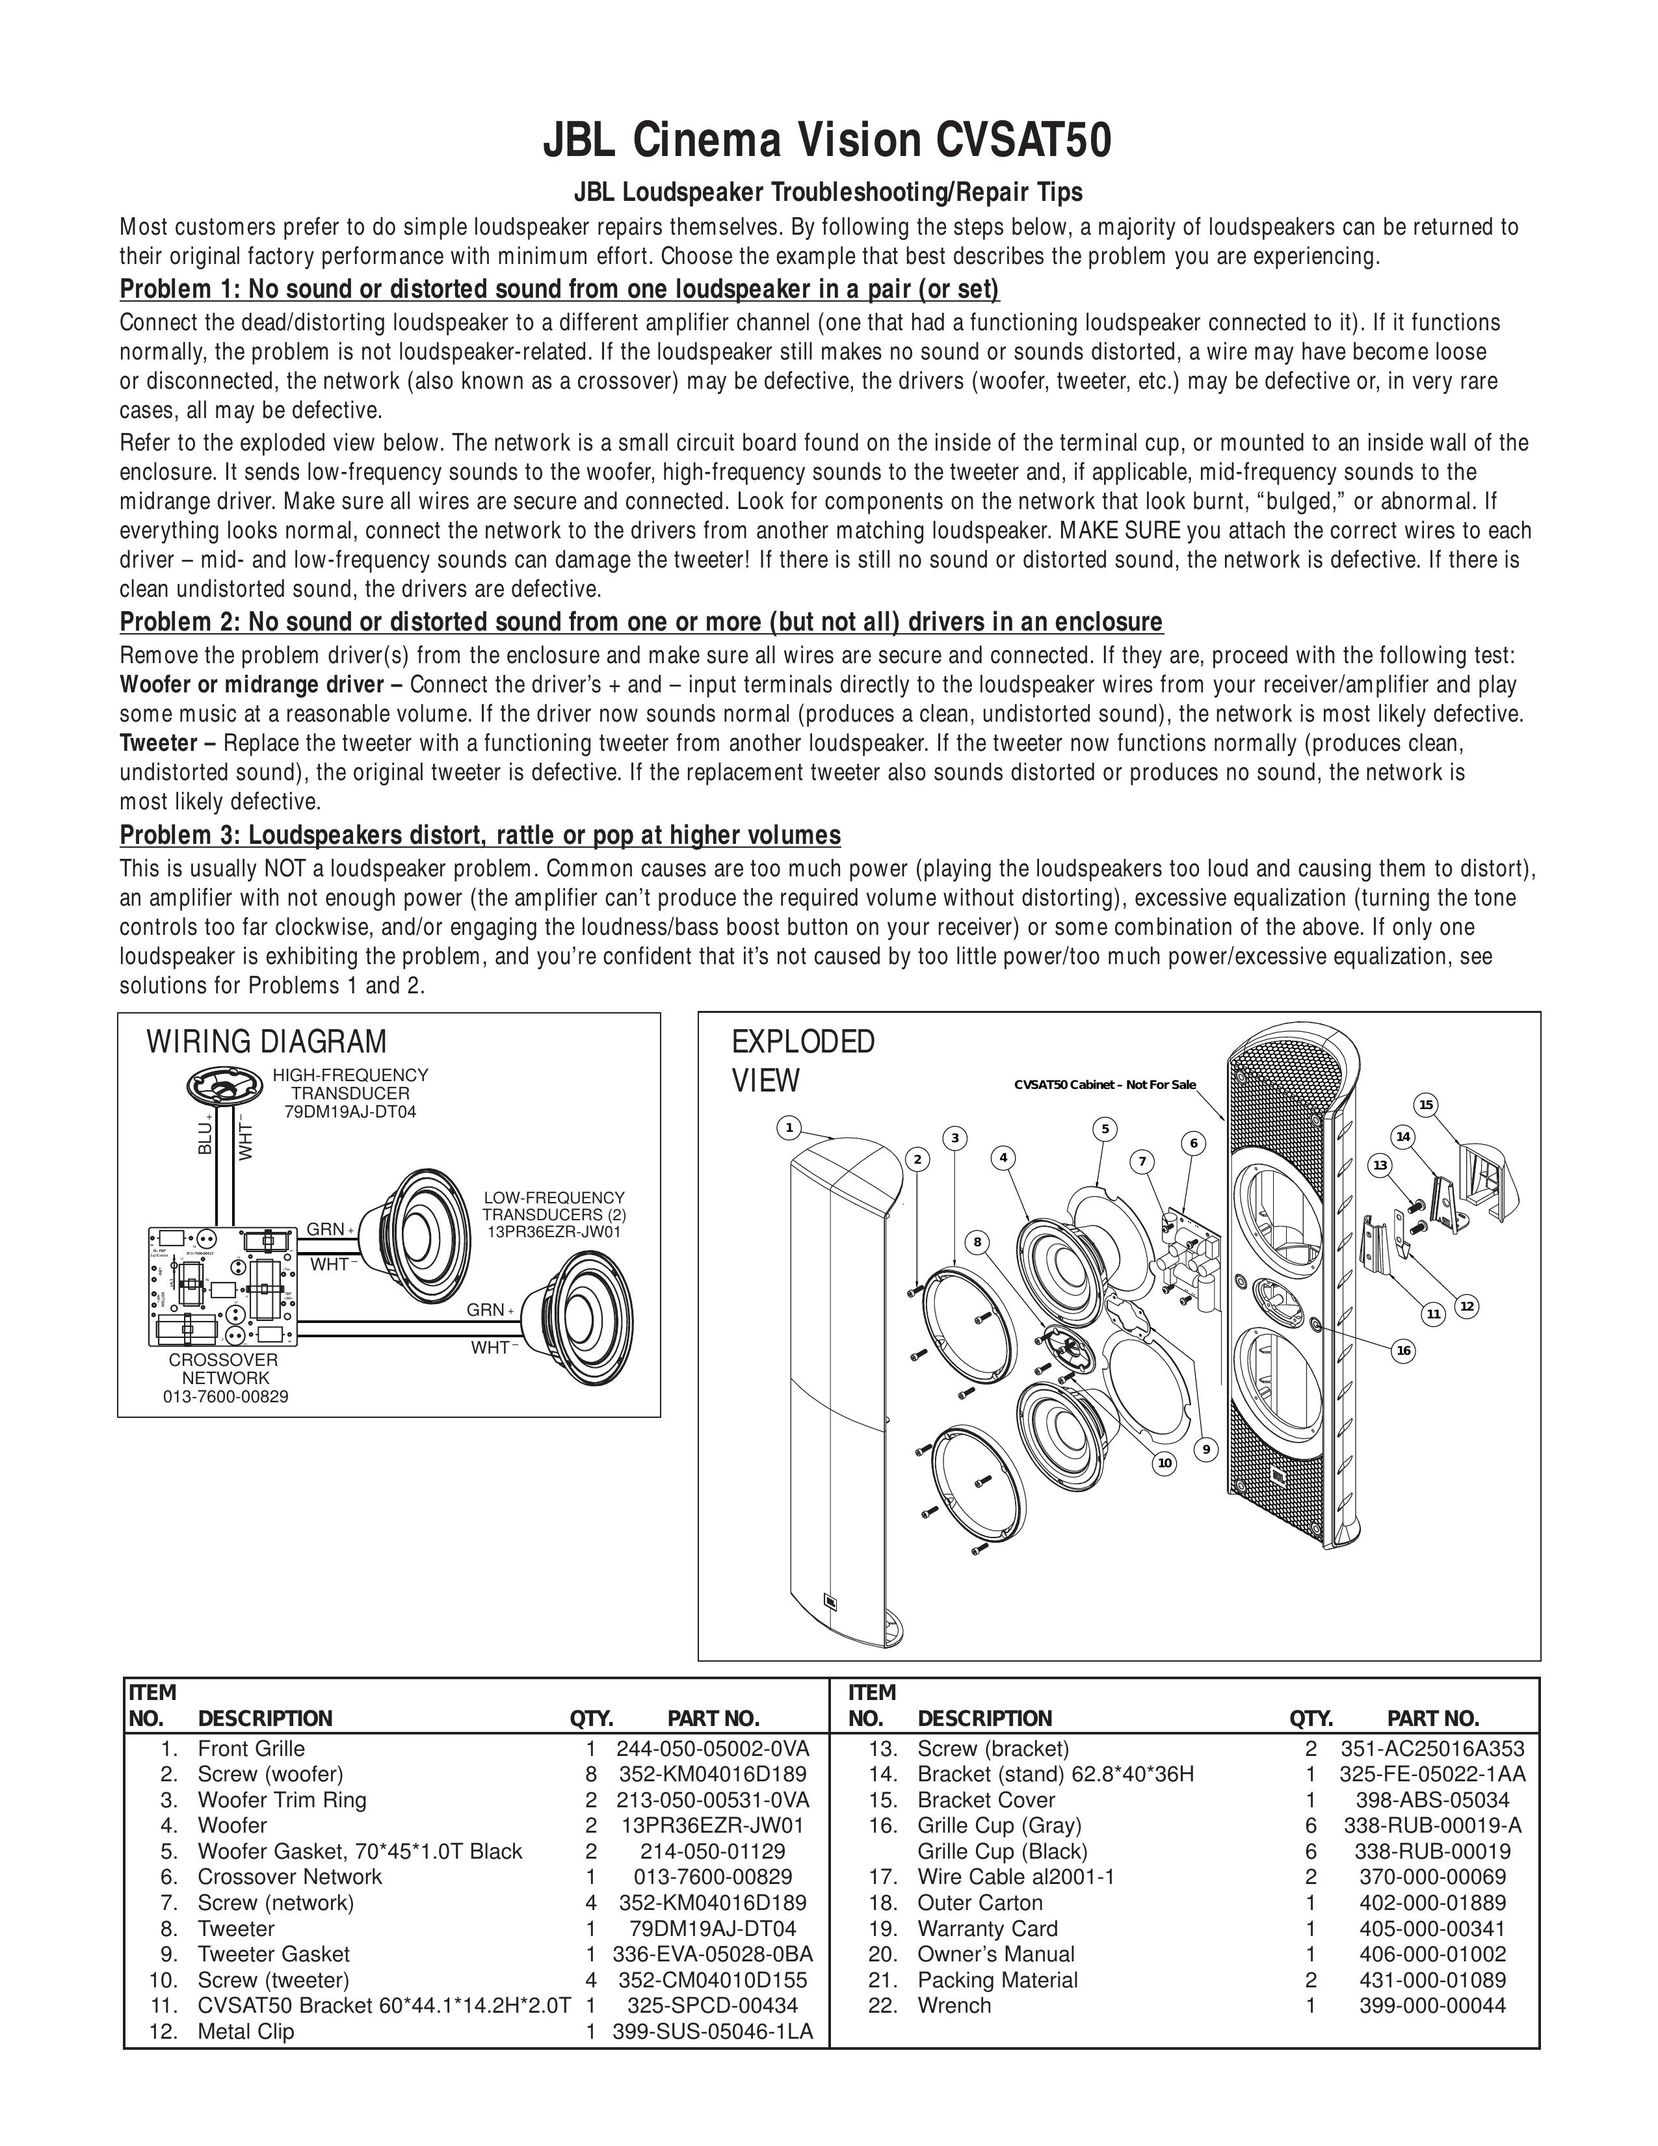 JBL CVSAT50 Home Theater System User Manual